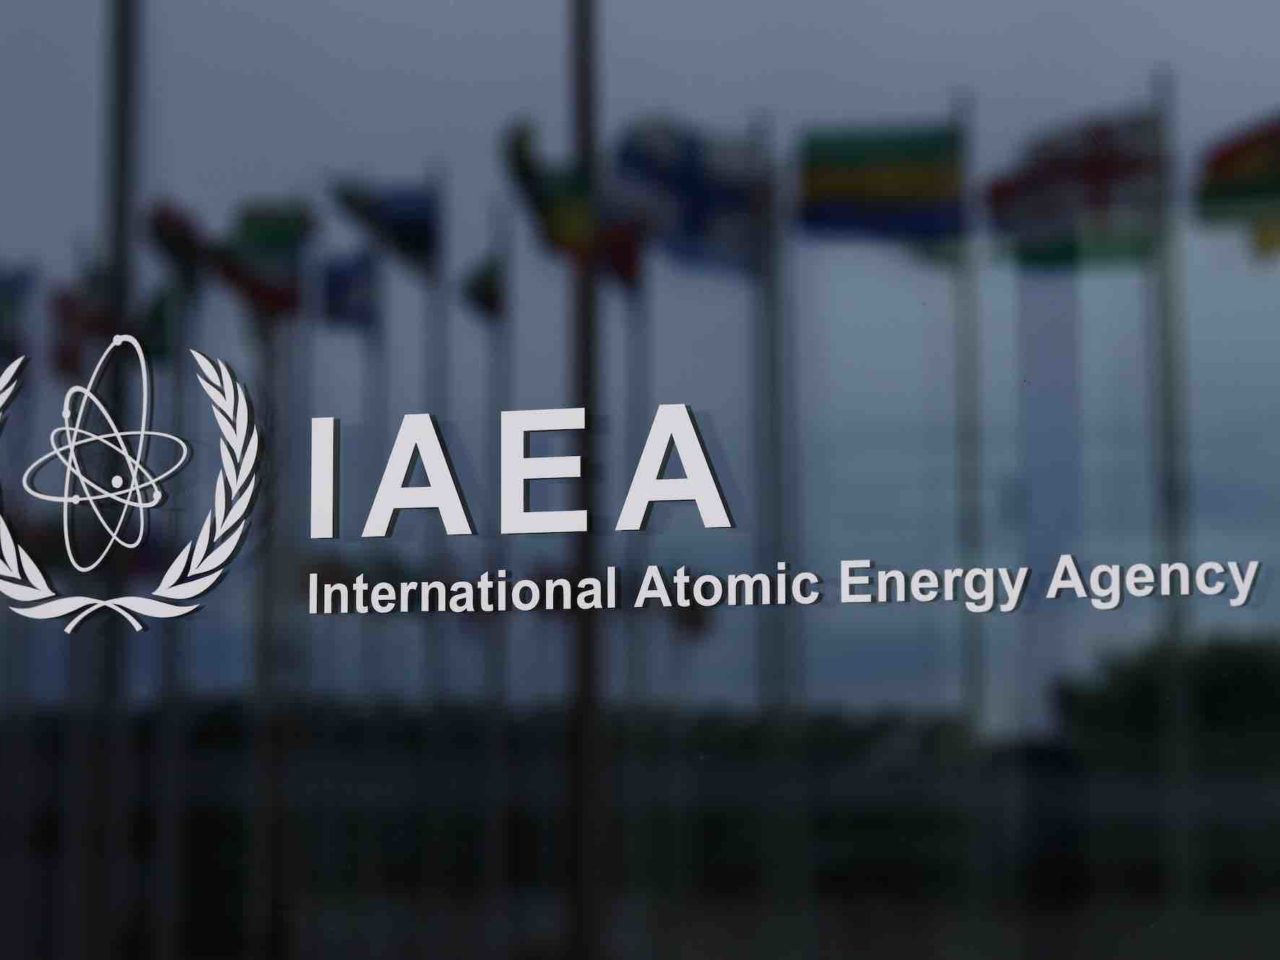 The logo of the International Atomic Energy Agency (IAEA) is seen at the IAEA headquarters, amid the coronavirus disease (COVID-19) pandemic, in Vienna, Austria May 24, 2021. REUTERS/Lisi Niesner